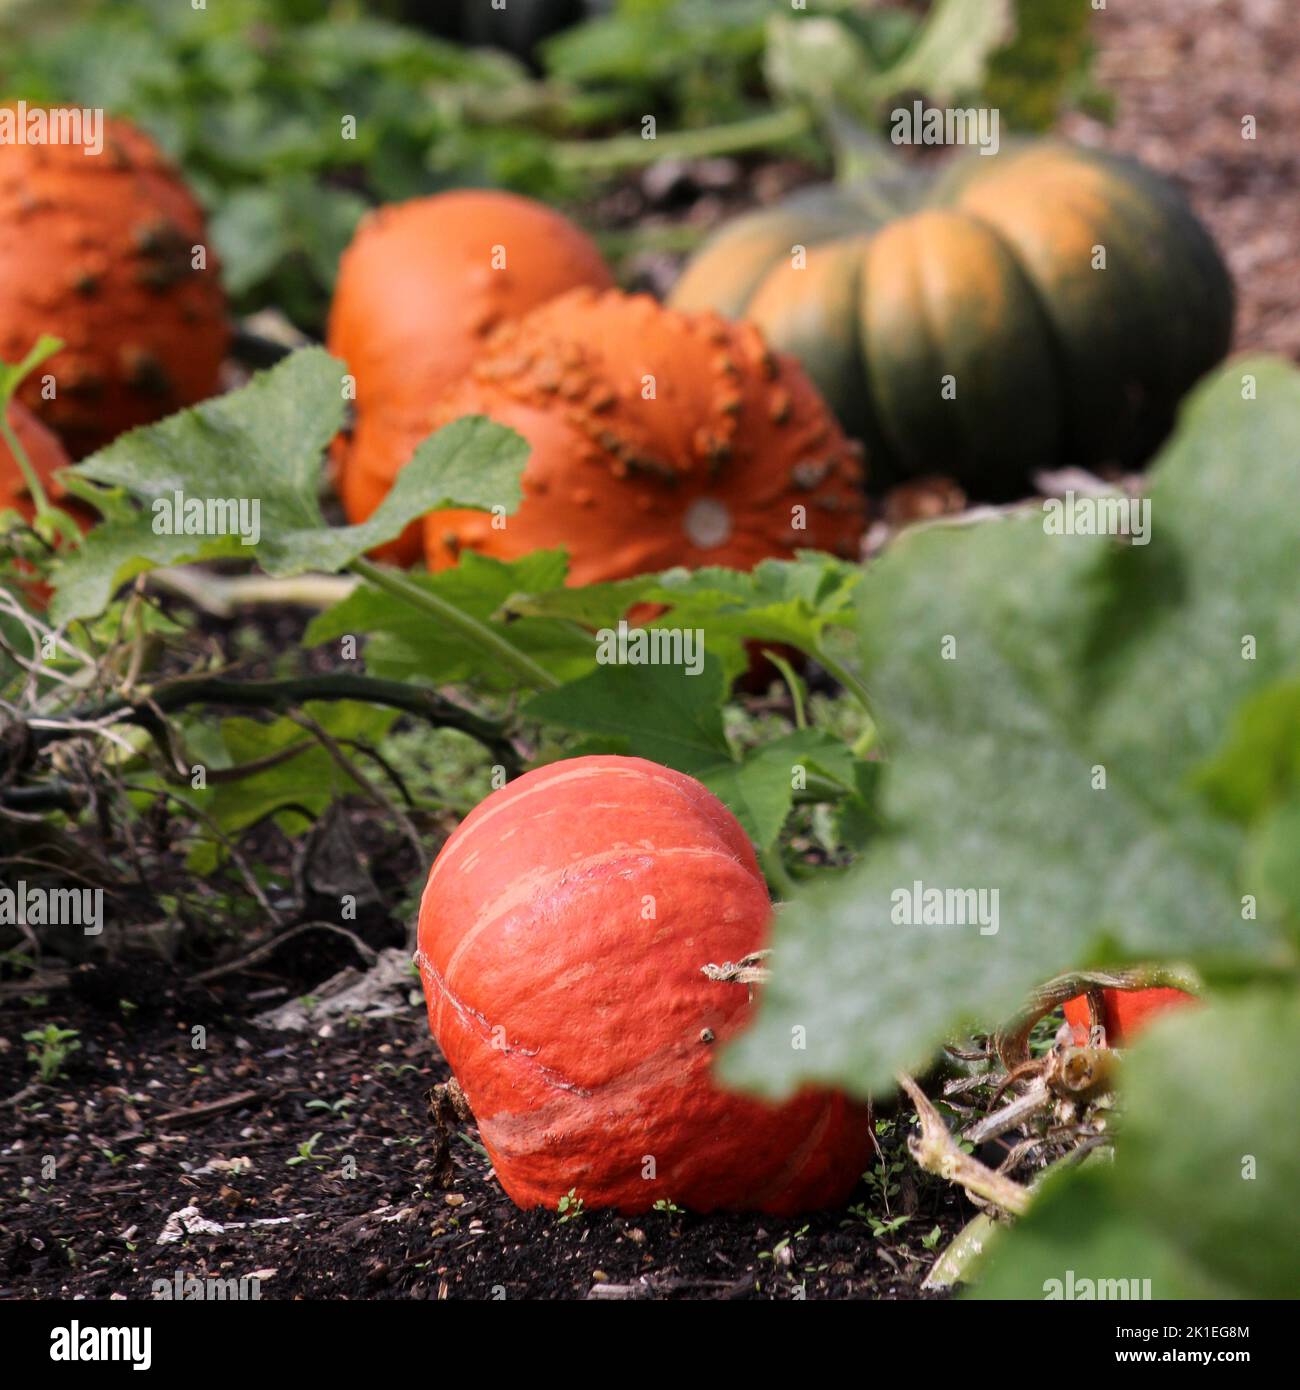 Pumpkin Stock Photo